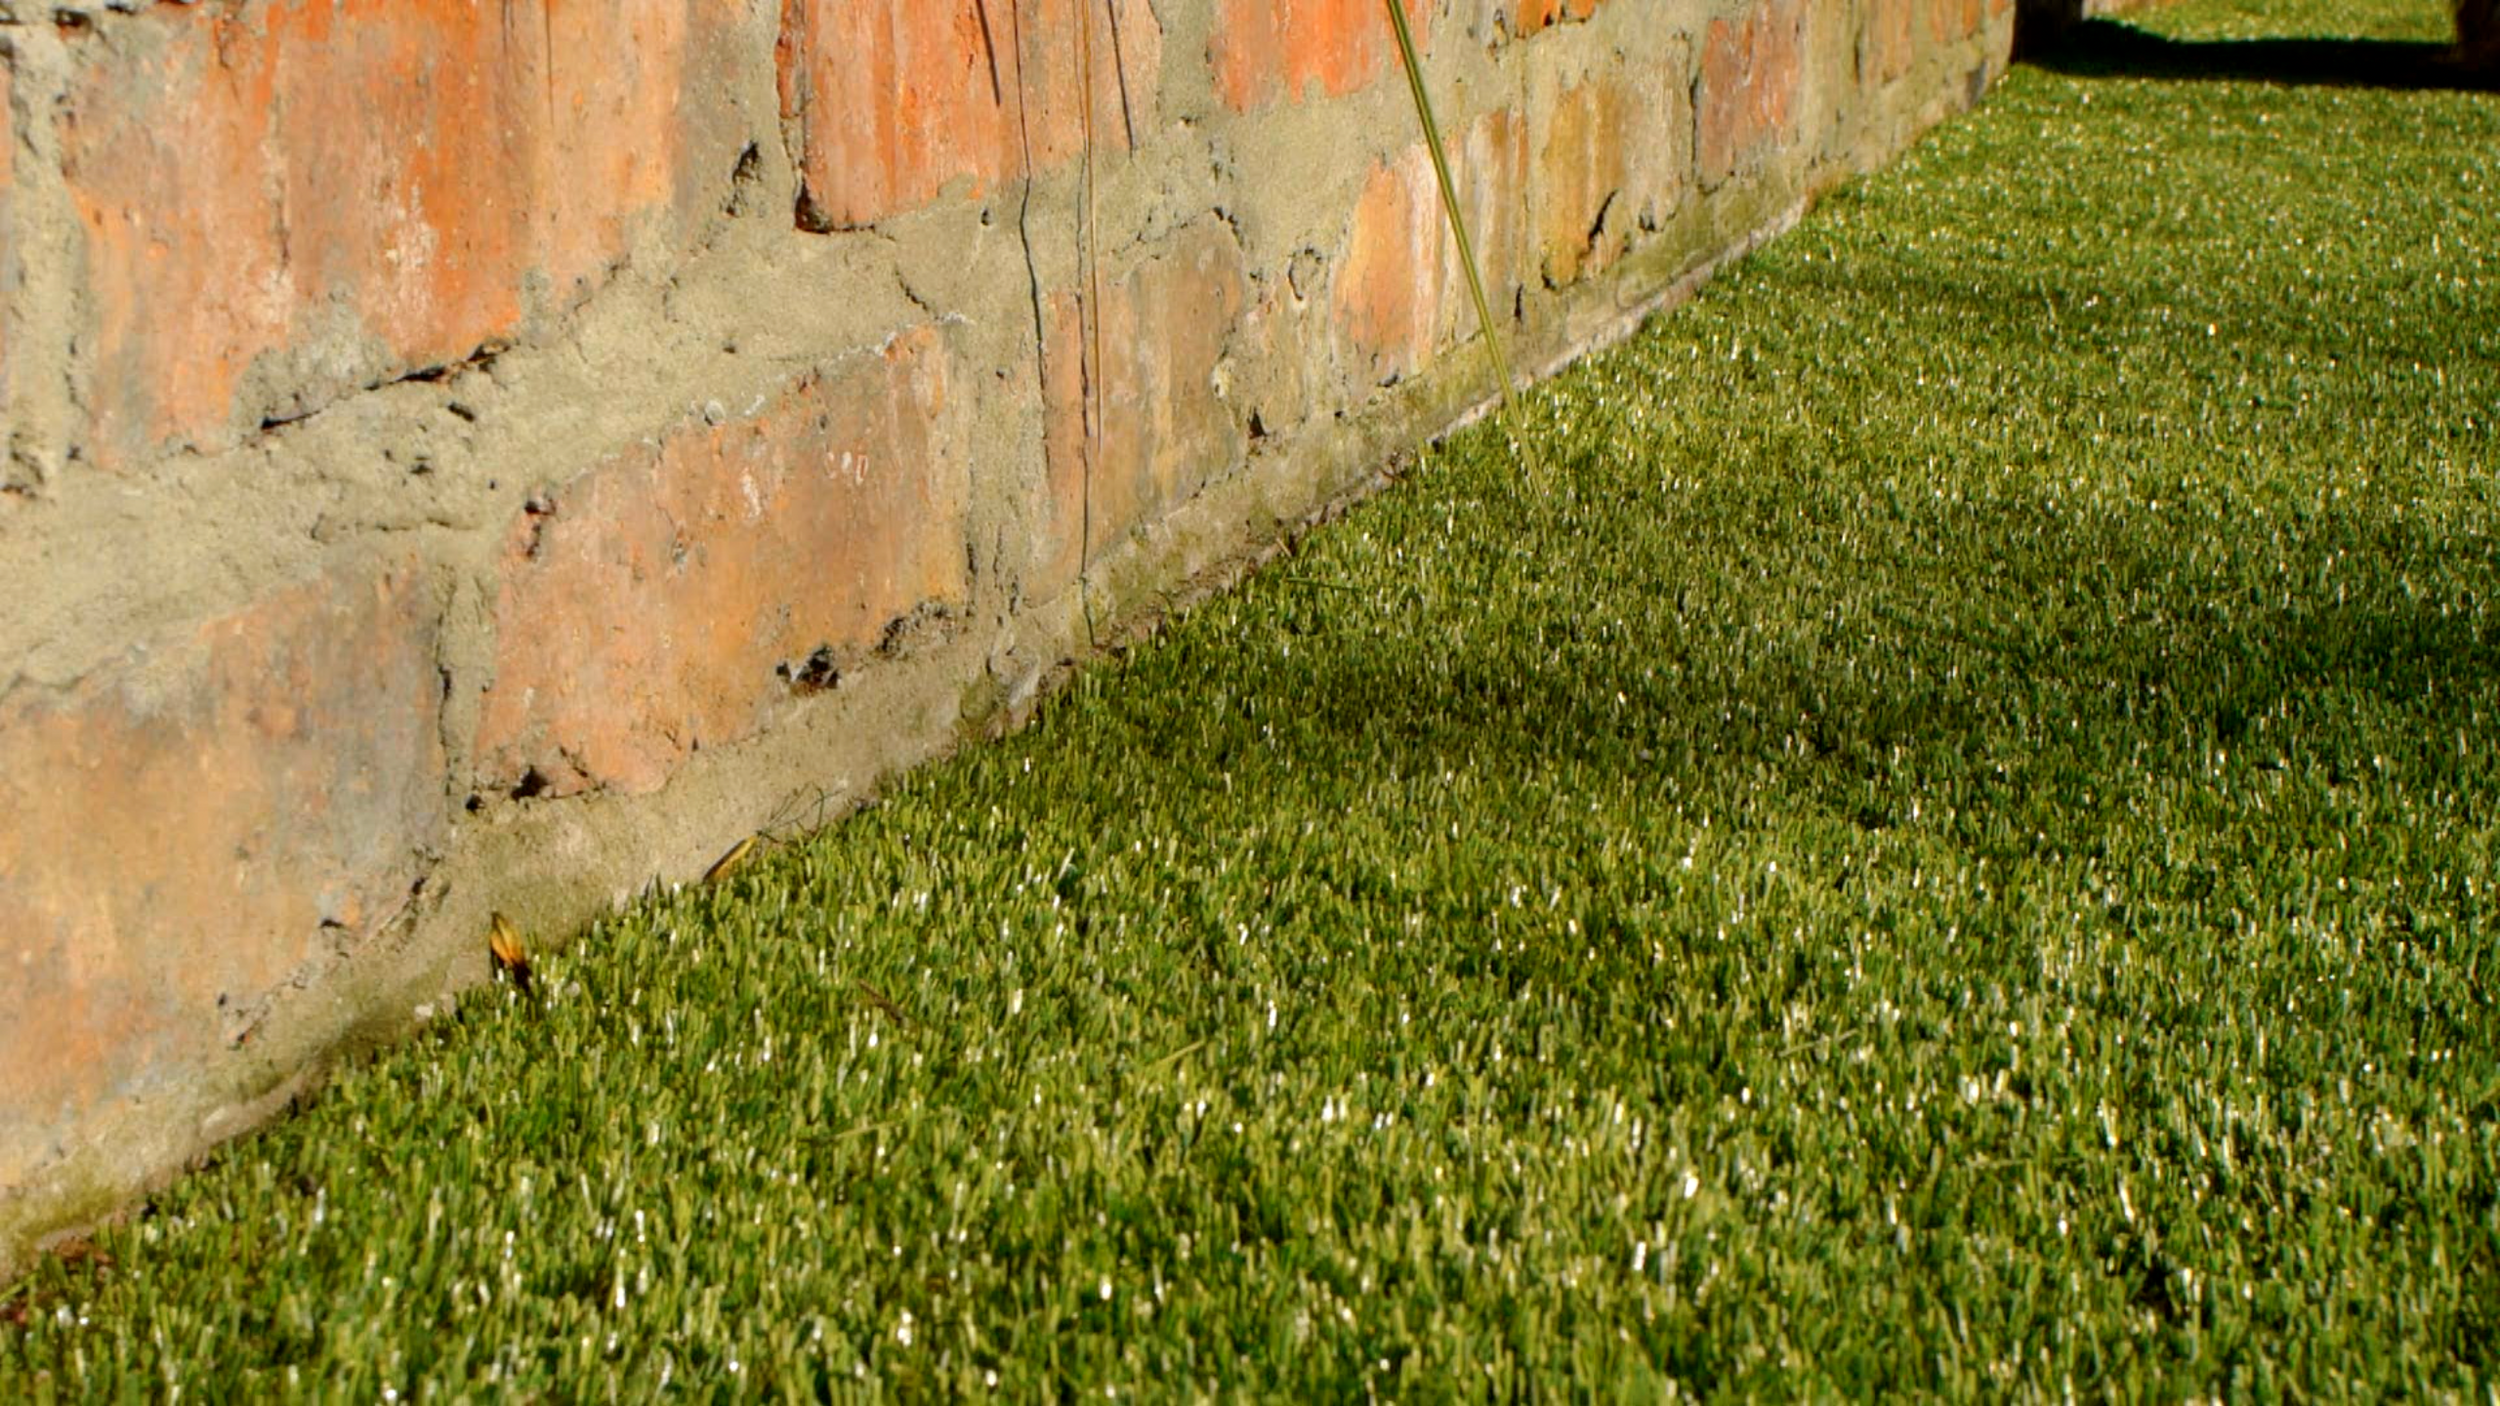 red brick wall and turf